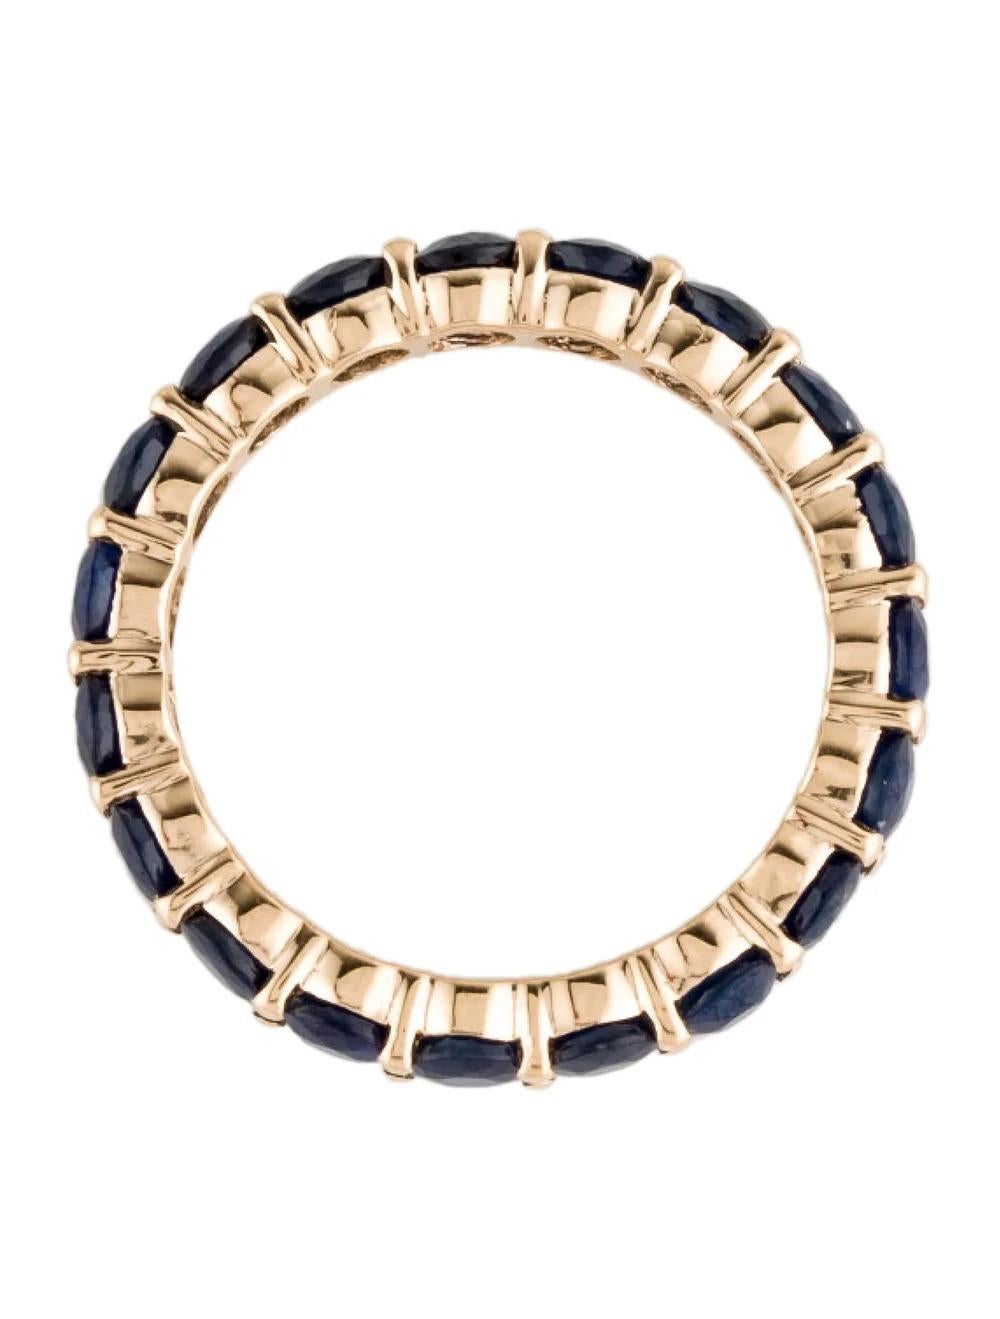 Women's 14K Sapphire Eternity Band Ring 3.80ctw Size 7.5 - Fine Jewelry Blue Gemstone For Sale